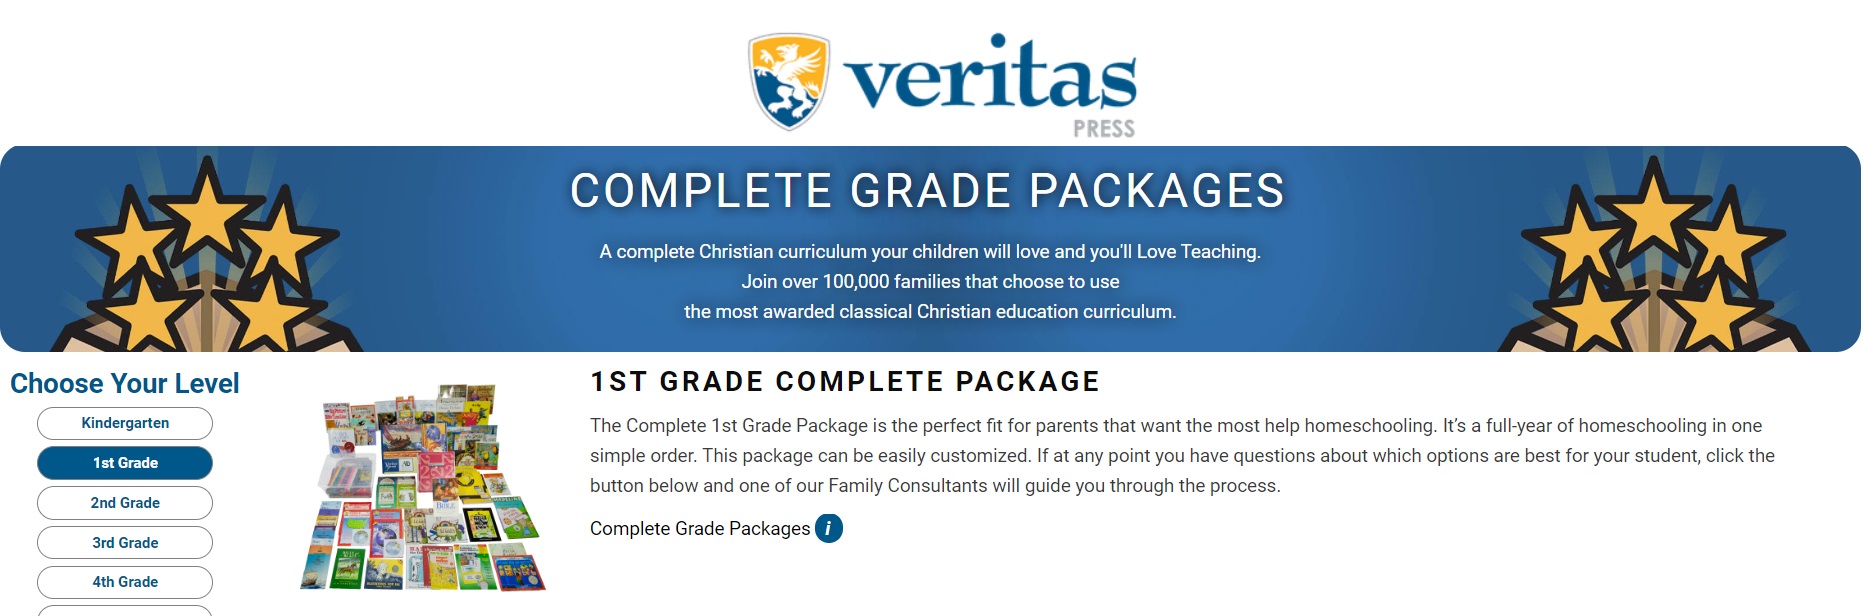 Veritas Press offer complete grade packages.